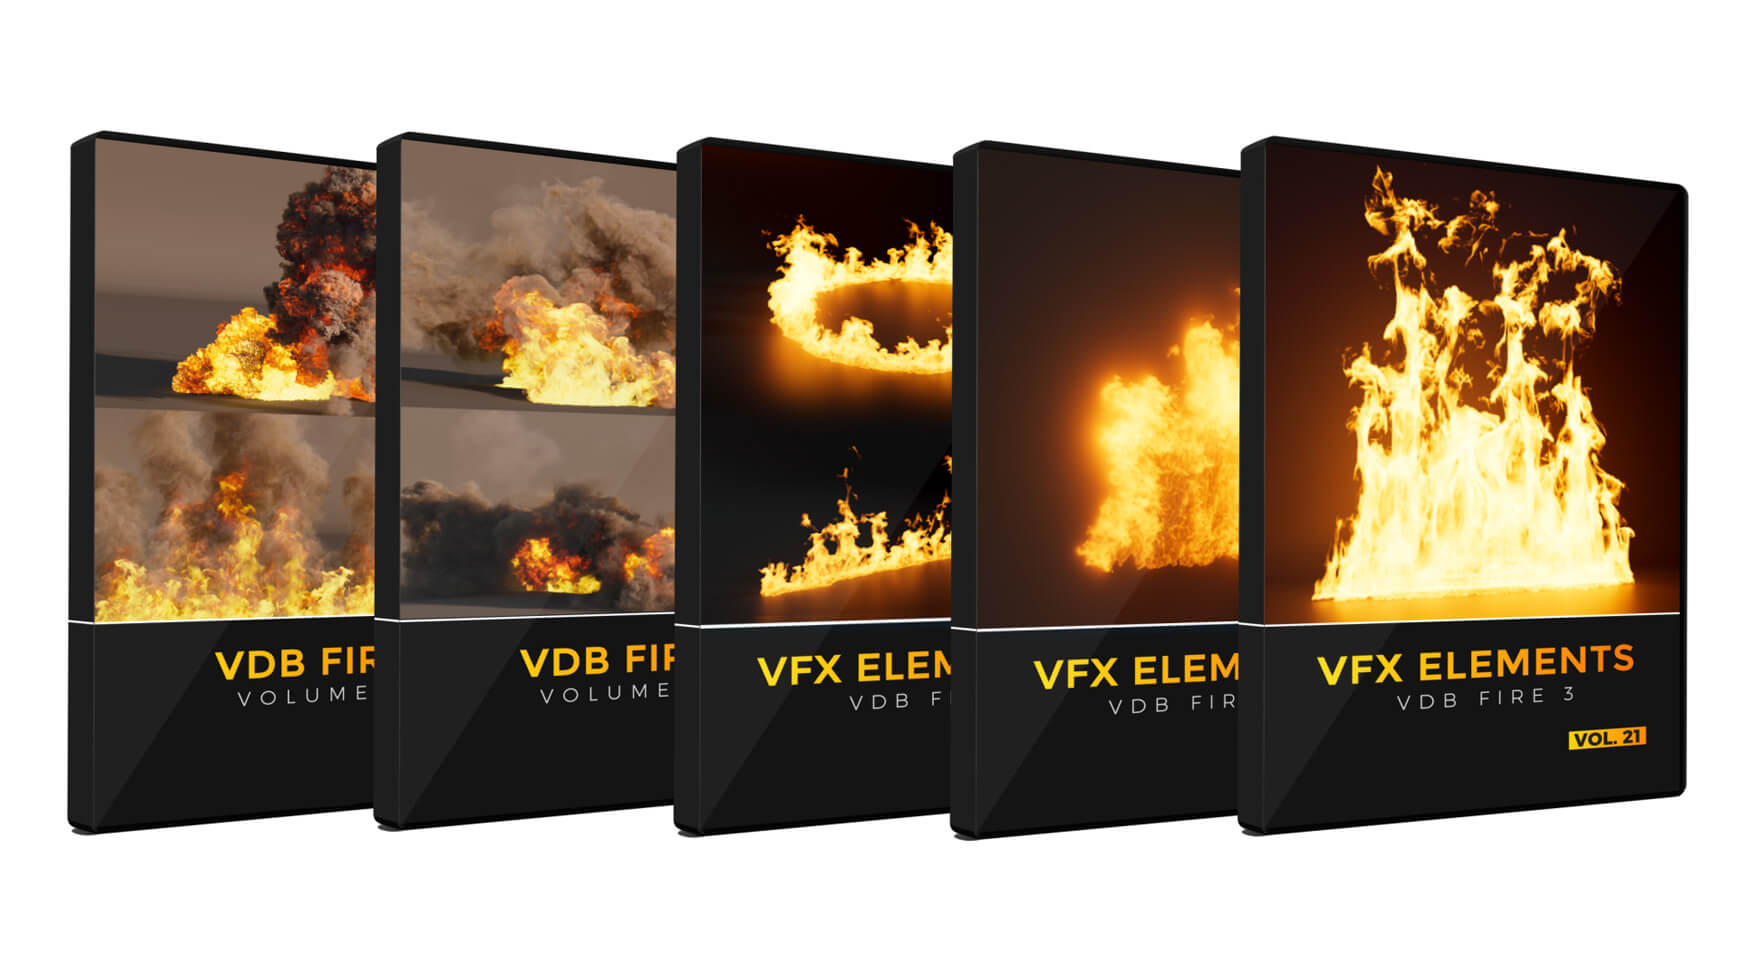 VFX Elements VDB Fire Bundle